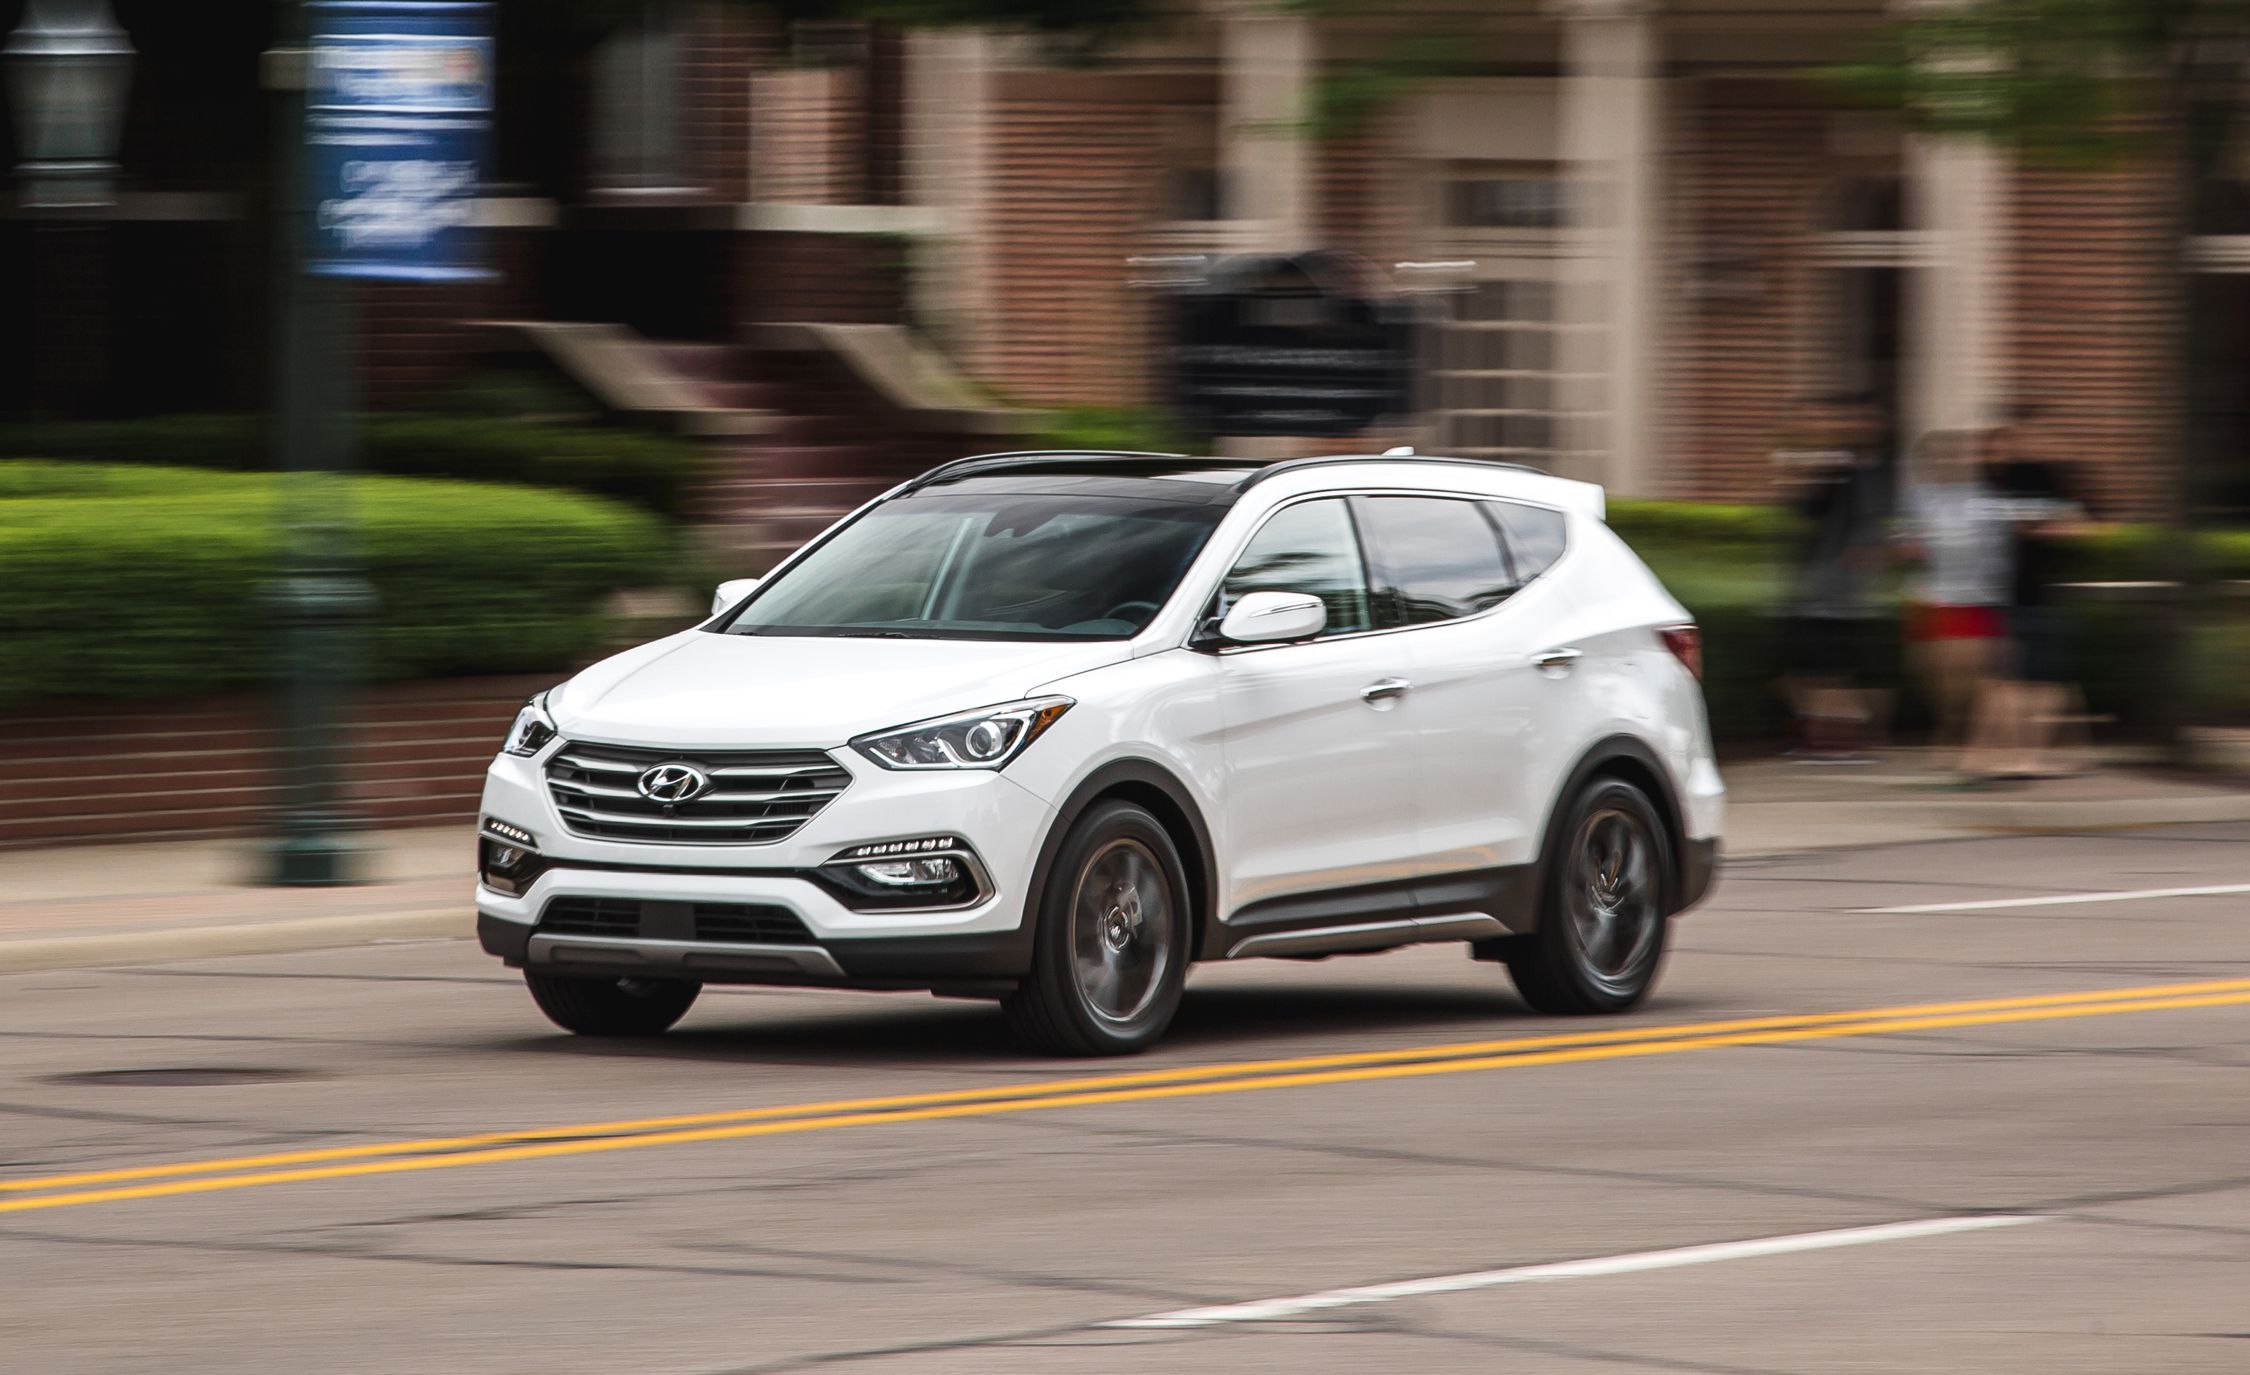 2018 Hyundai Santa Fe Sport Review, Pricing and Specs